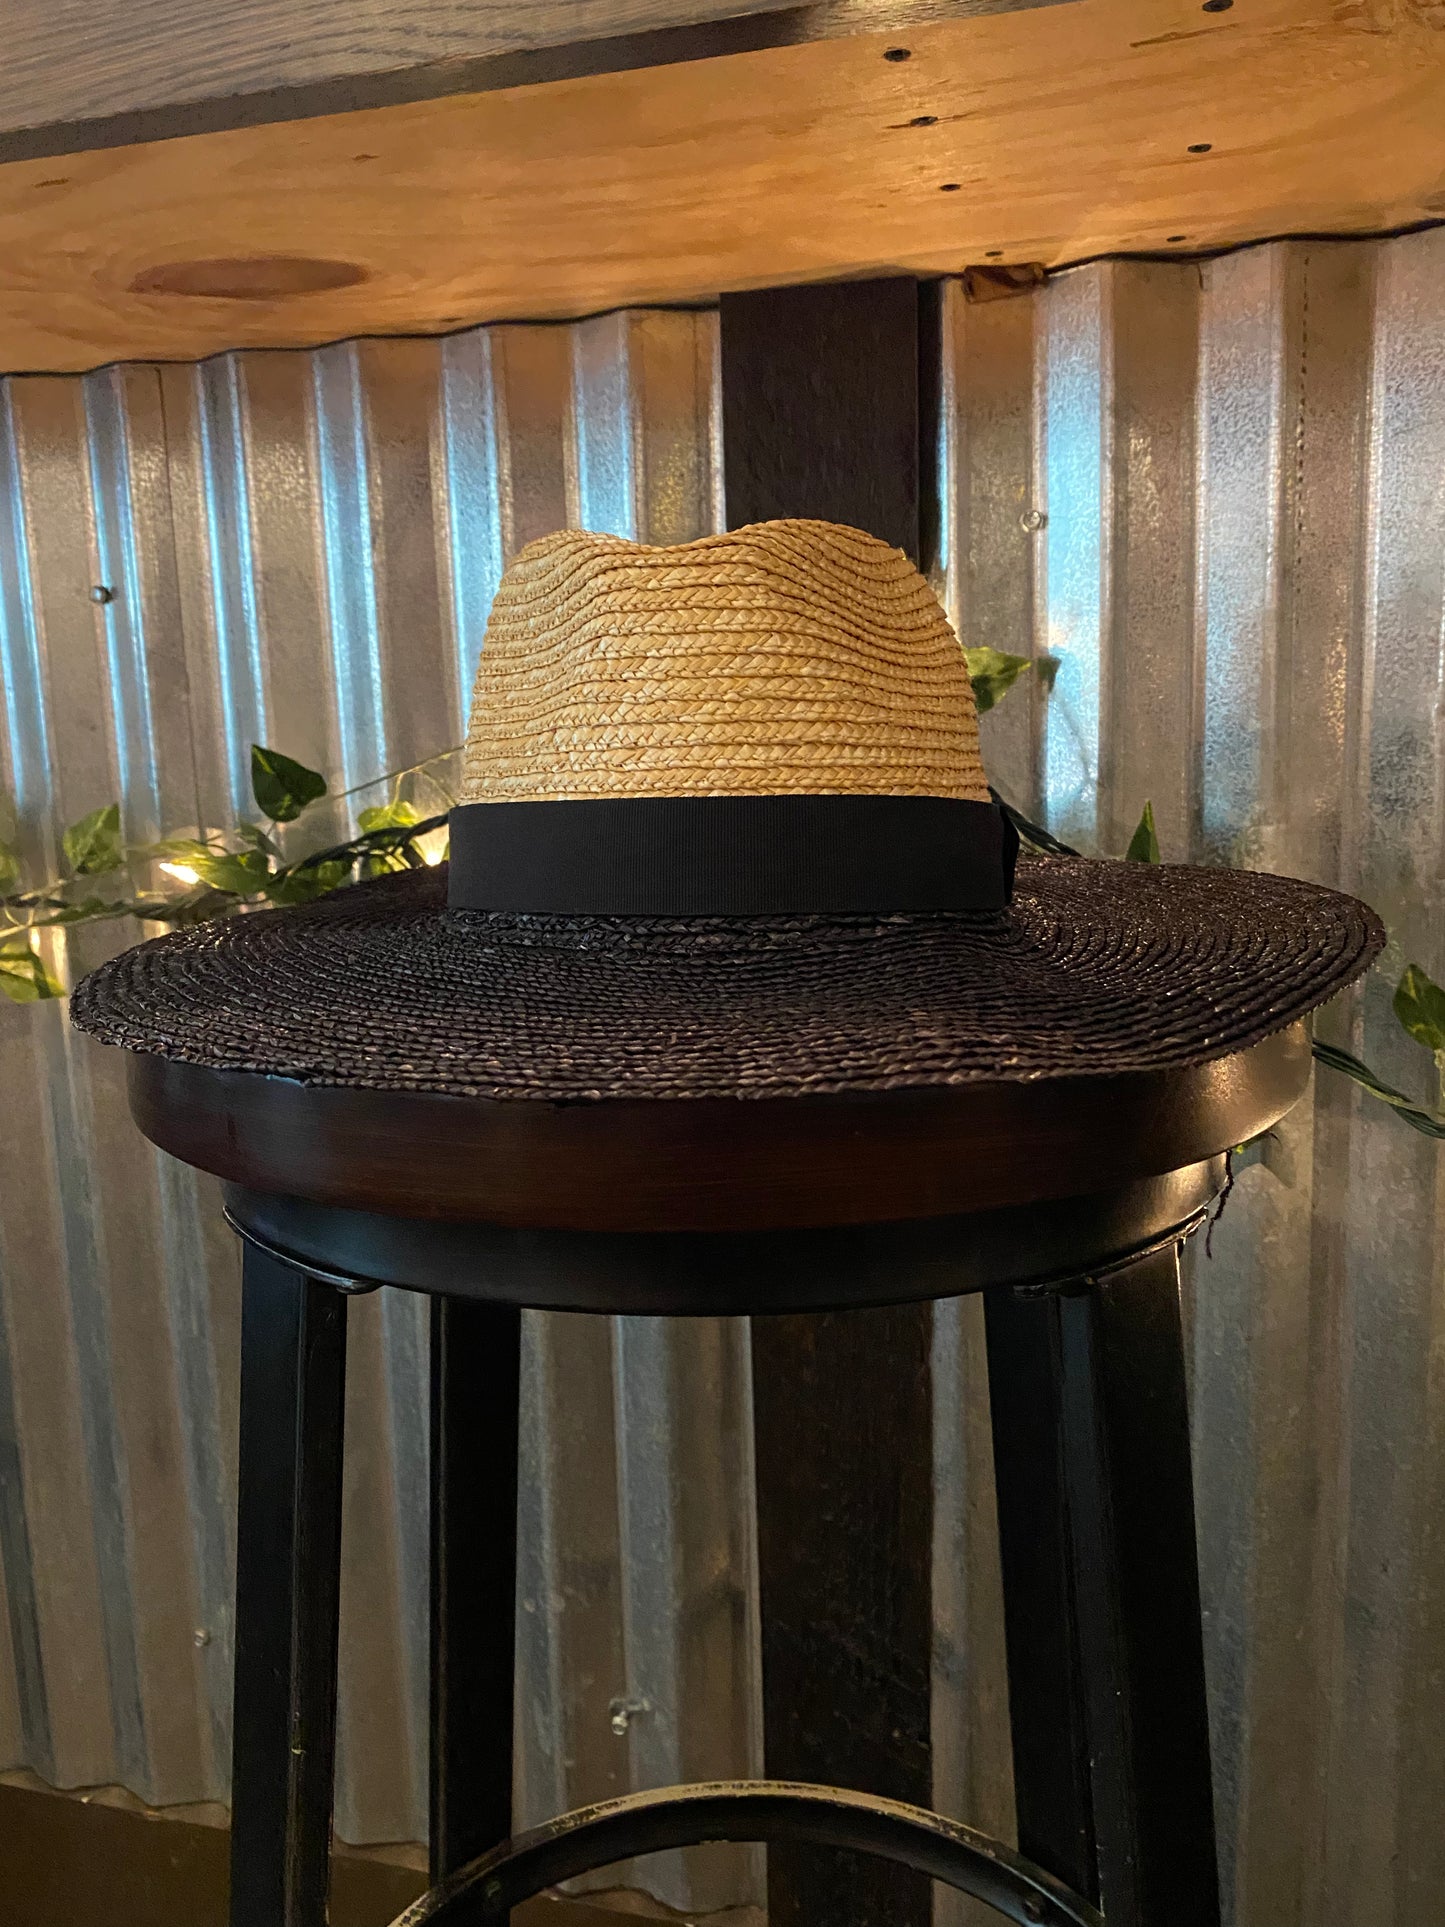 Color match Fashion straw hat